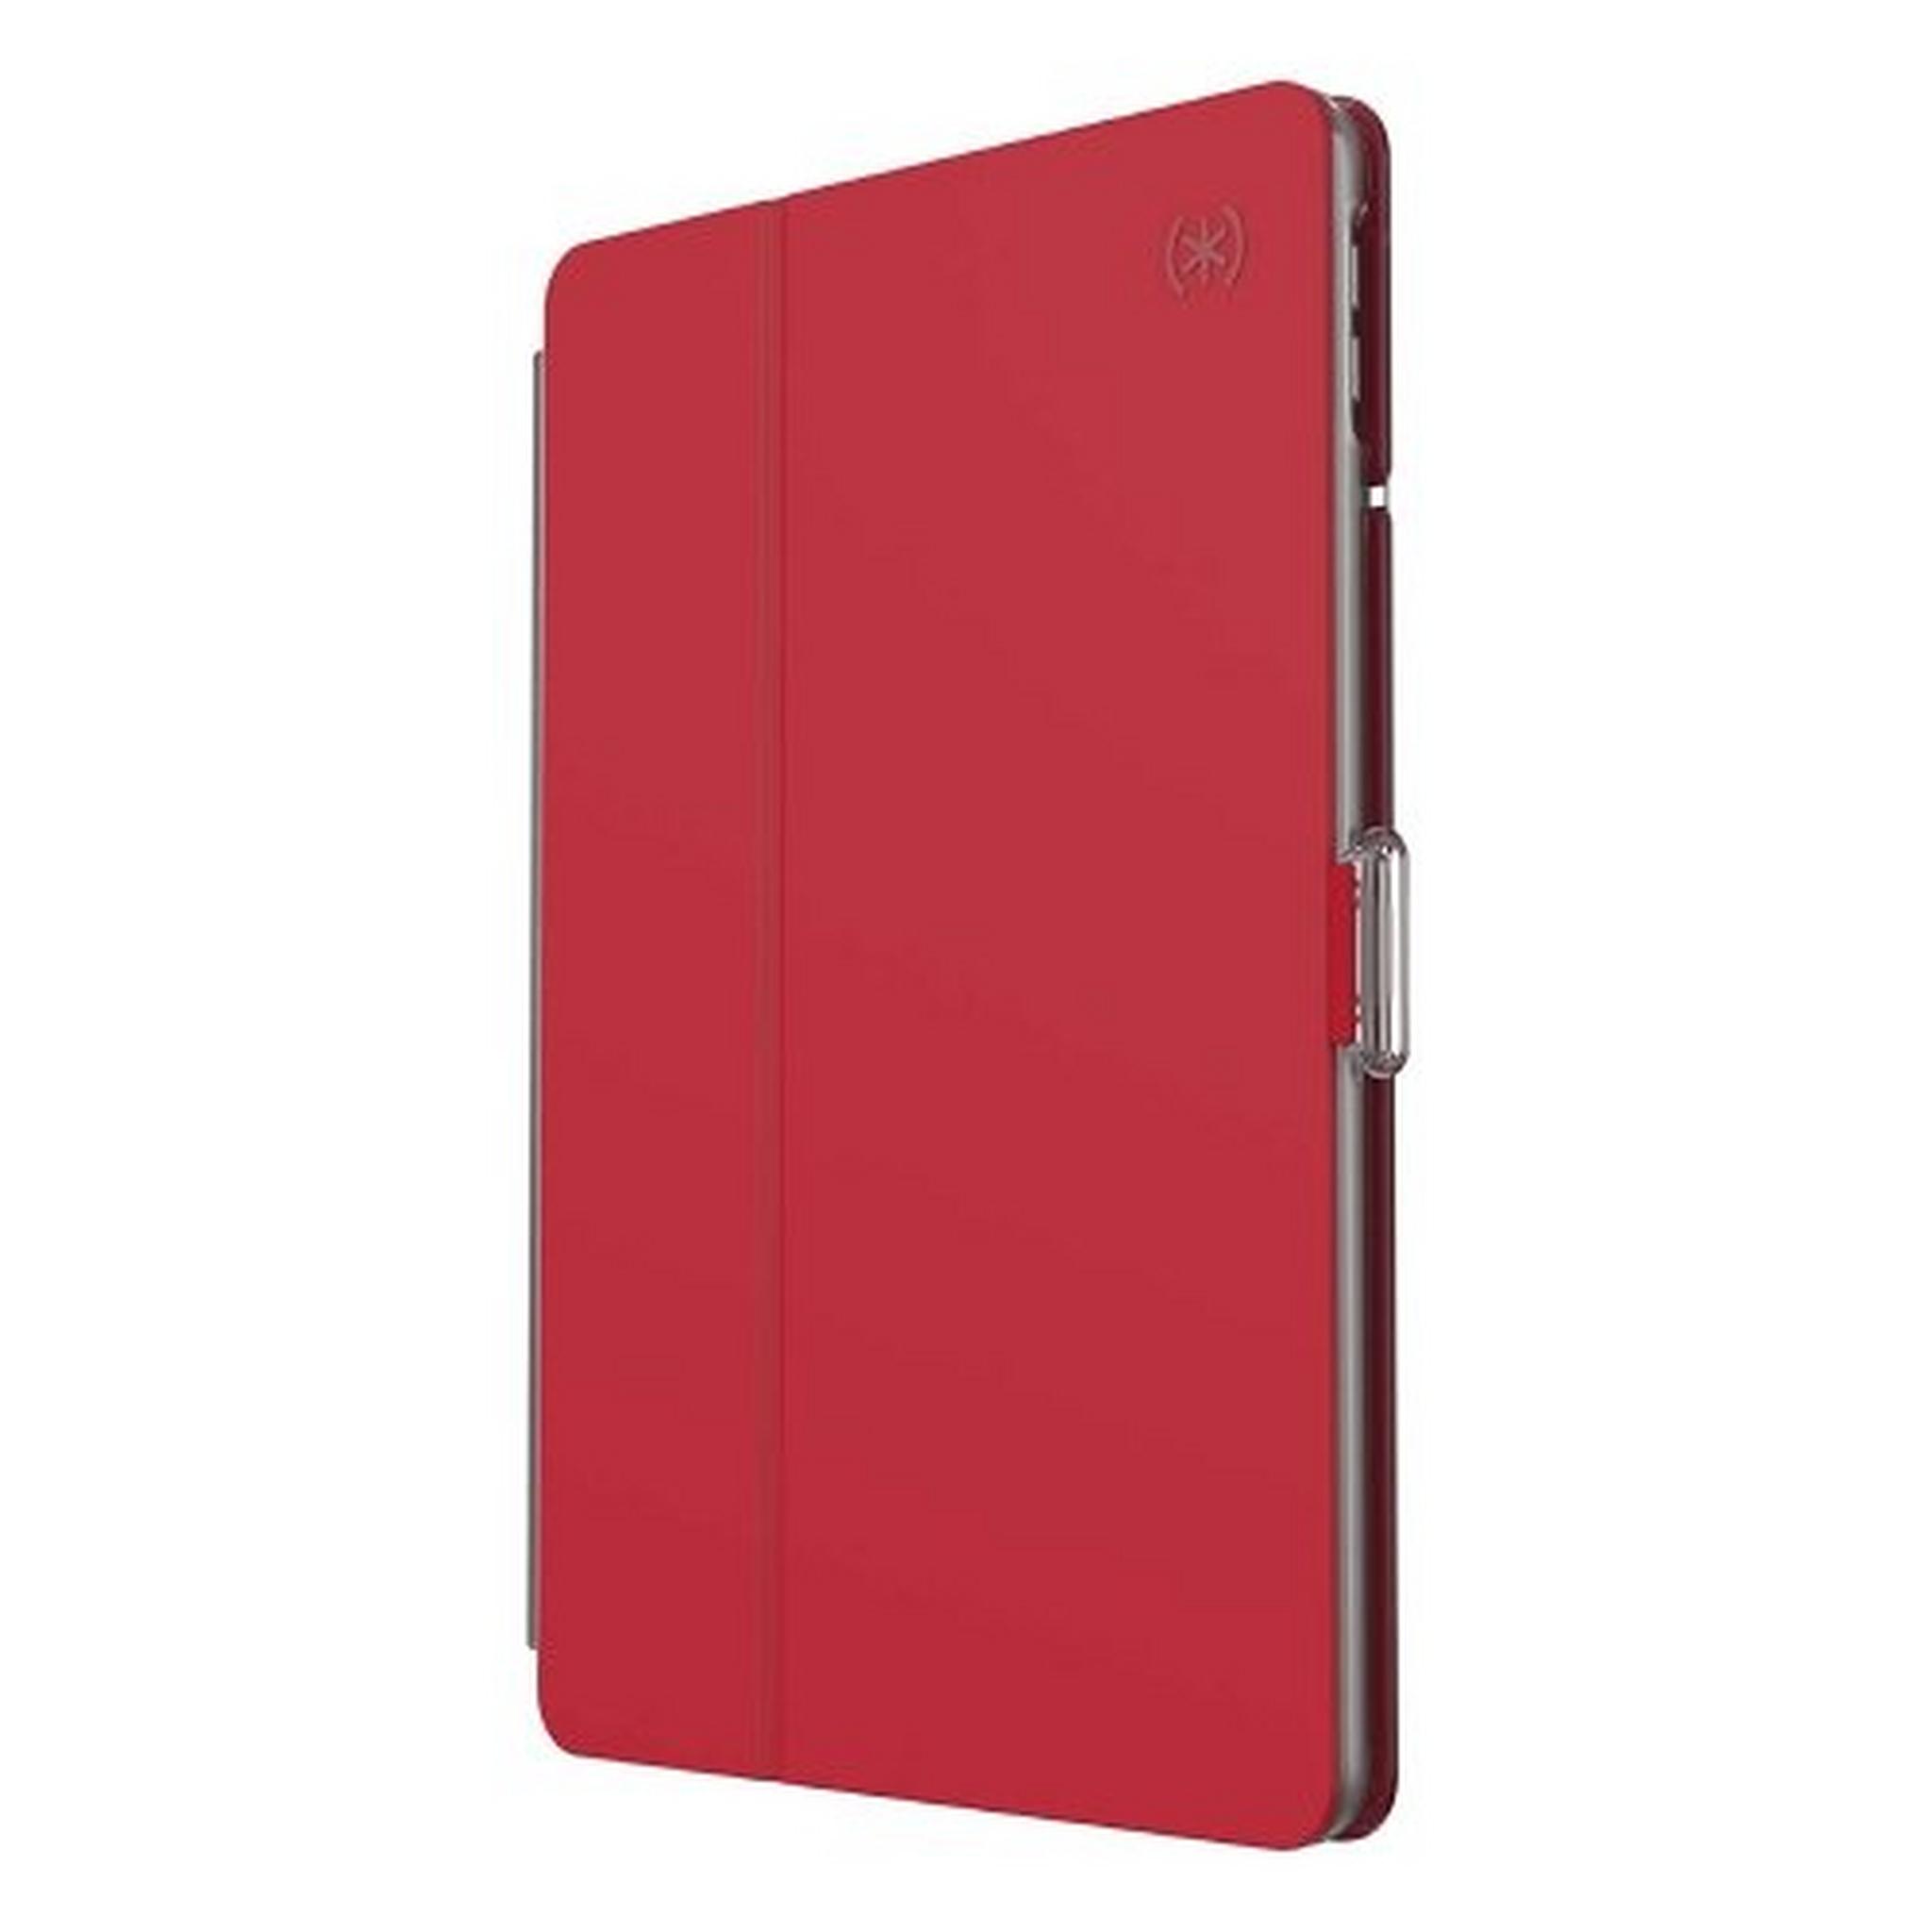 Speck Balance Folio 10.2-inch iPad Case - Red / Clear